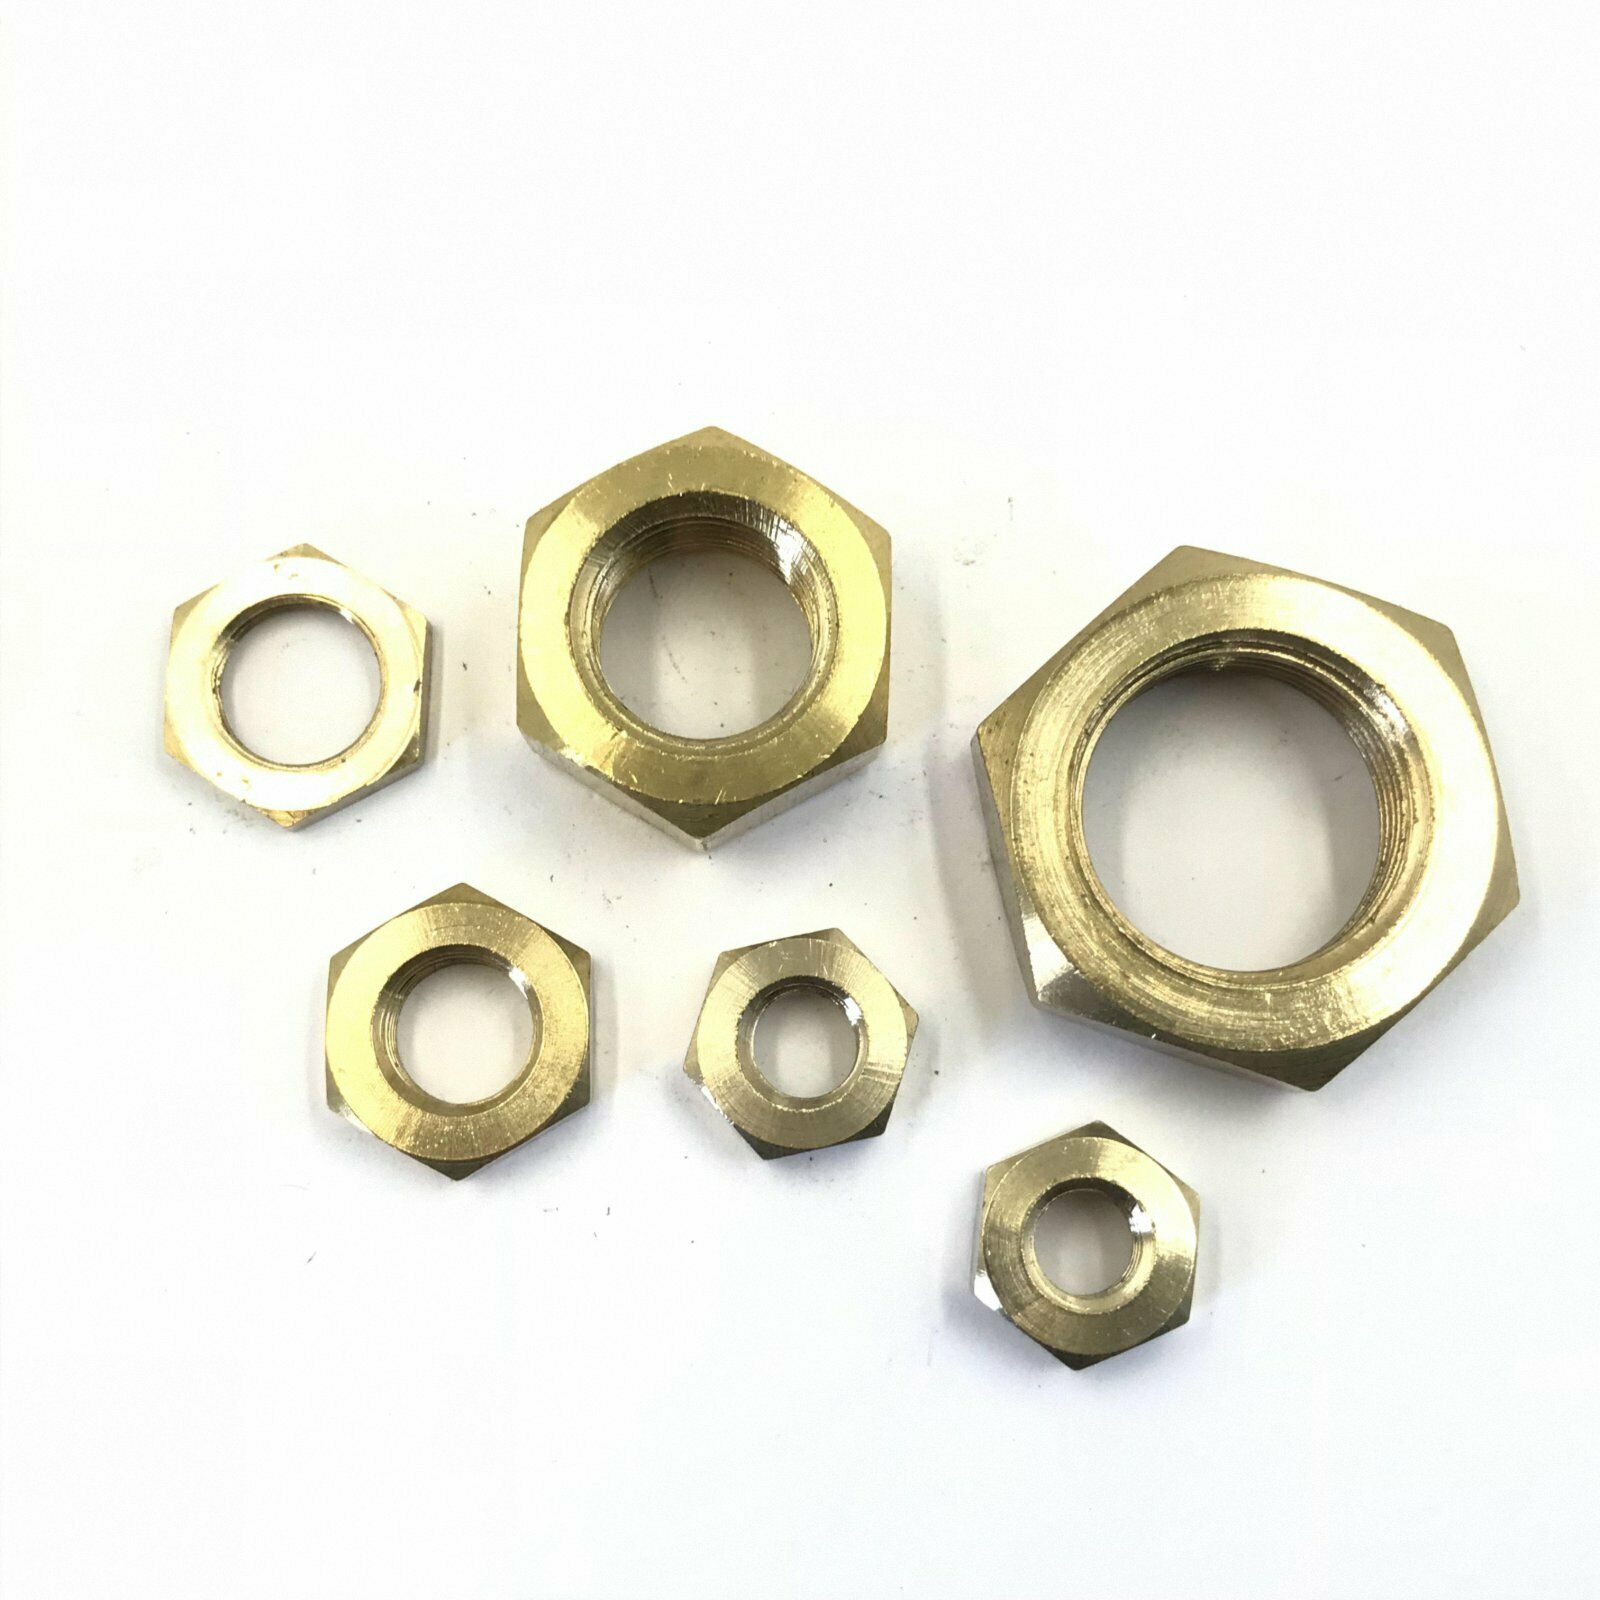 11 Kinds Solid Brass Hex Nuts Right Hand Thread Assortment Kit M1.4 - M12 Set